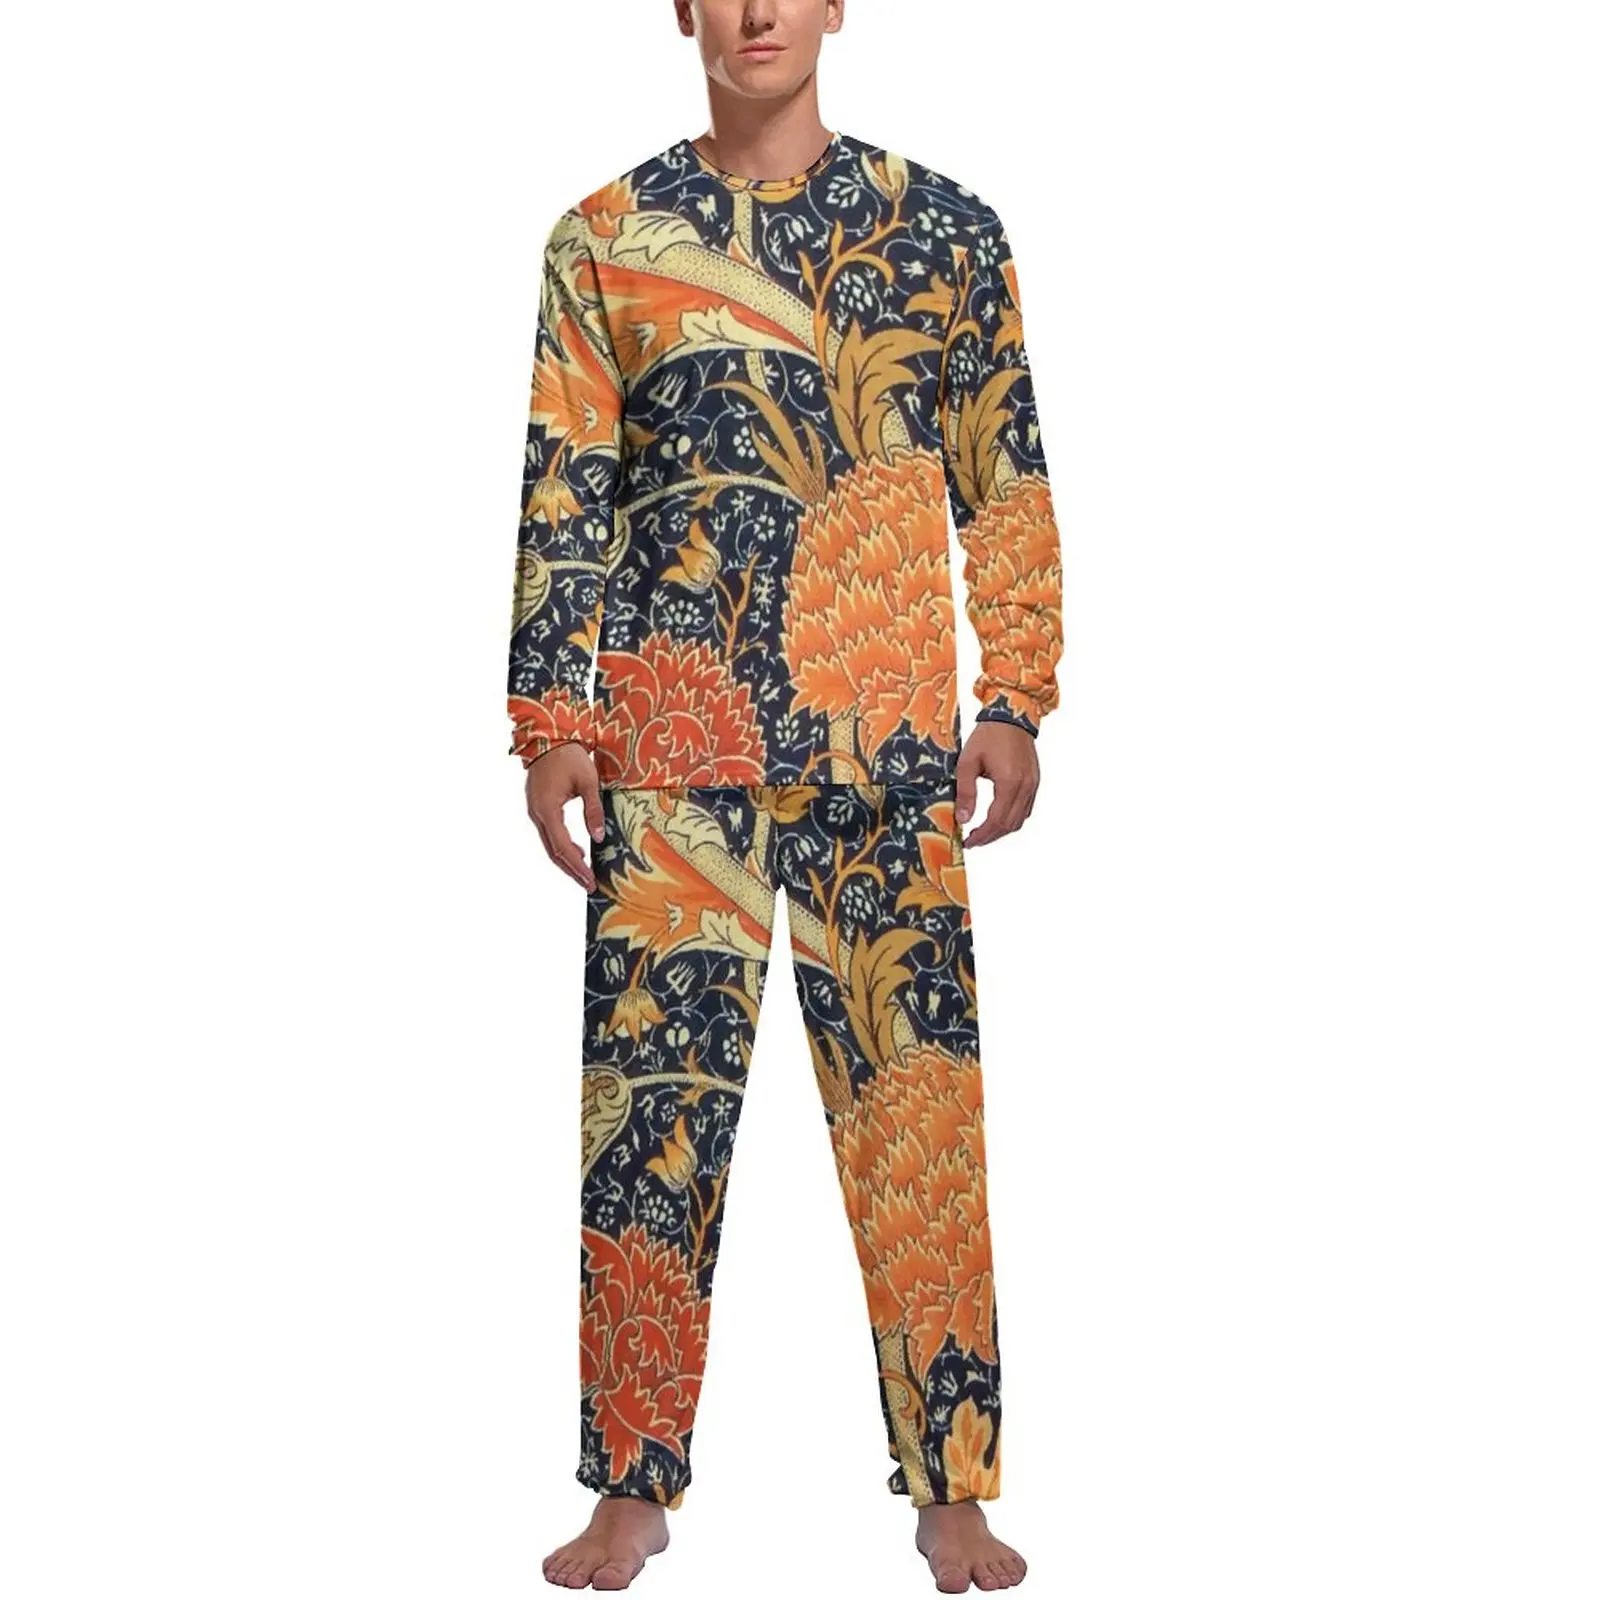 Floral Art Print Pajamas Spring Vintage Artistic Casual Sleepwear Mens Two Piece Design Long Sleeves Cute Pajamas Set